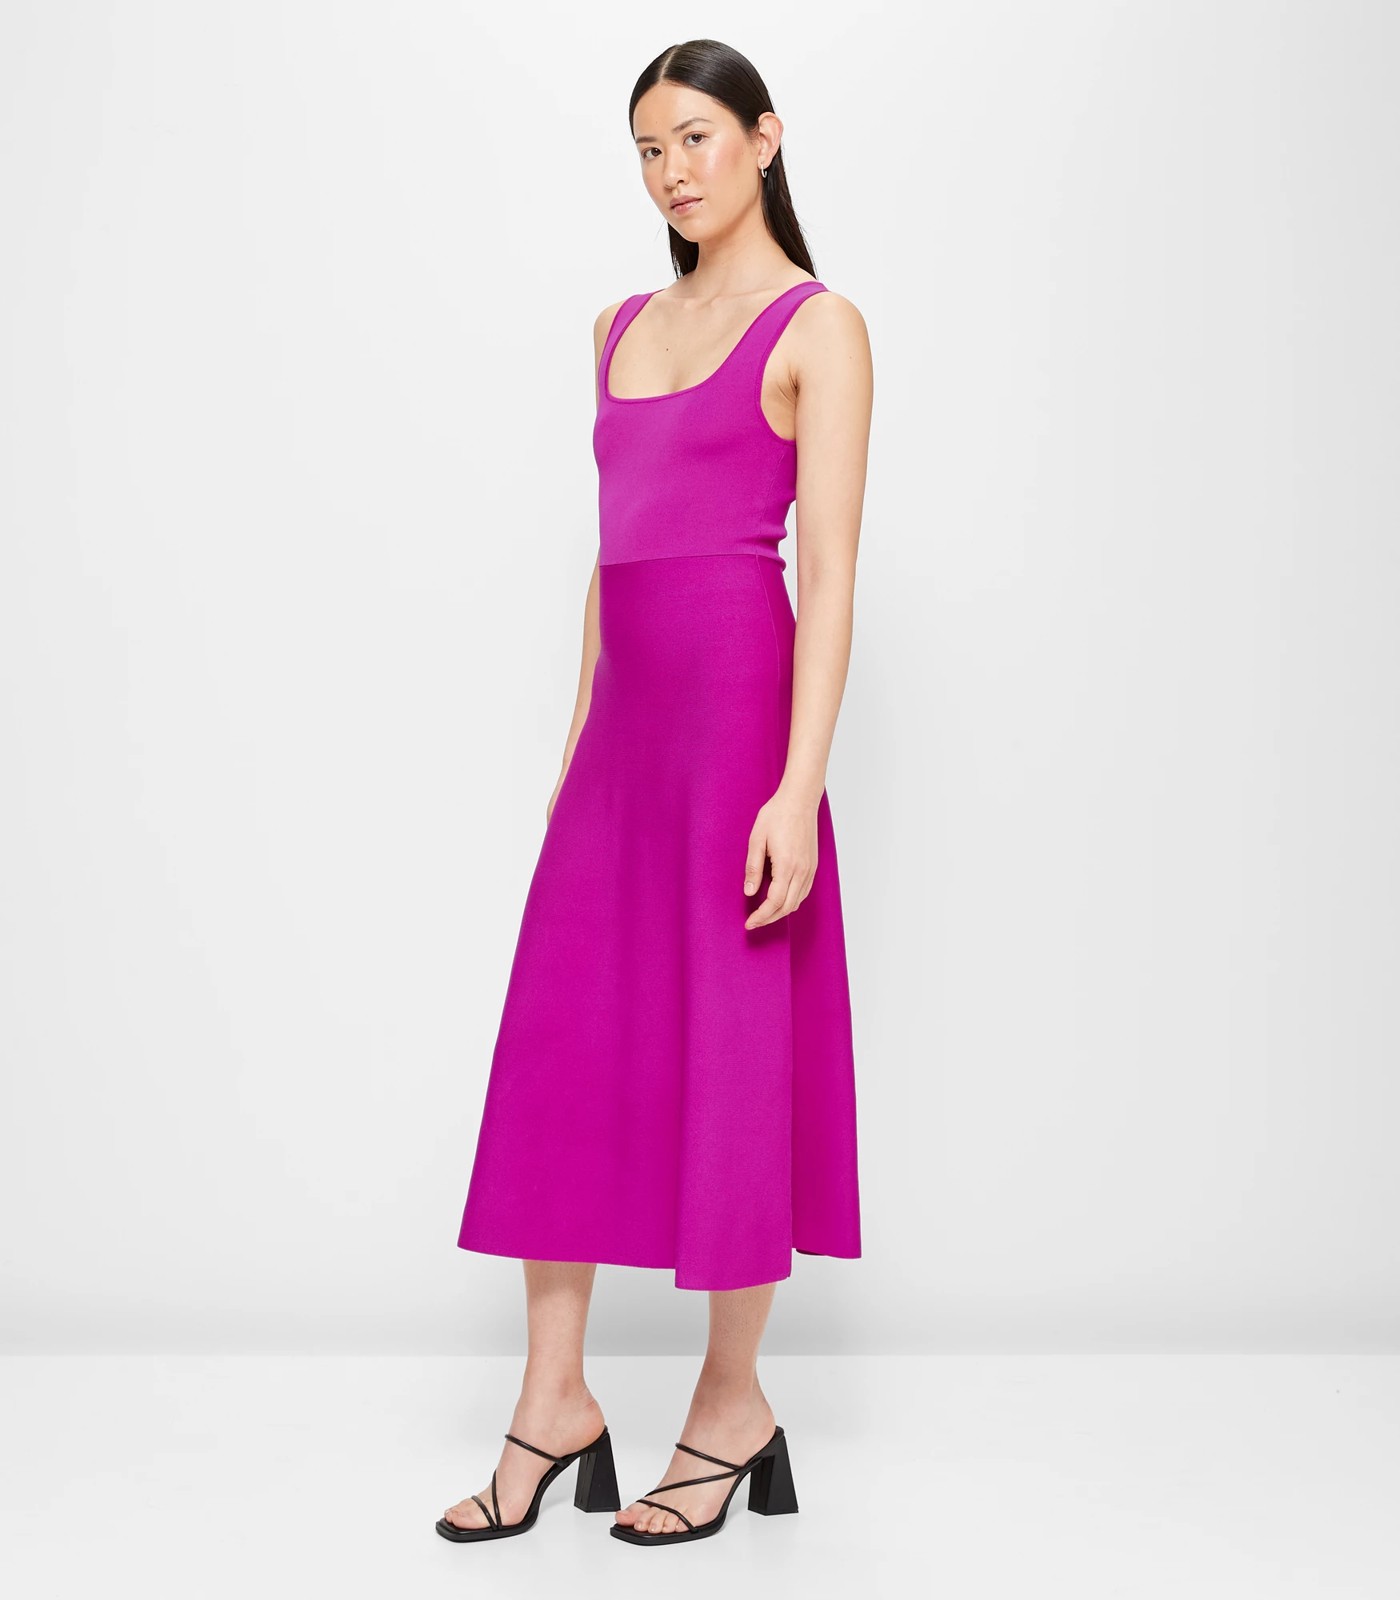 Crepe Knit Flare Dress - Preview | Target Australia